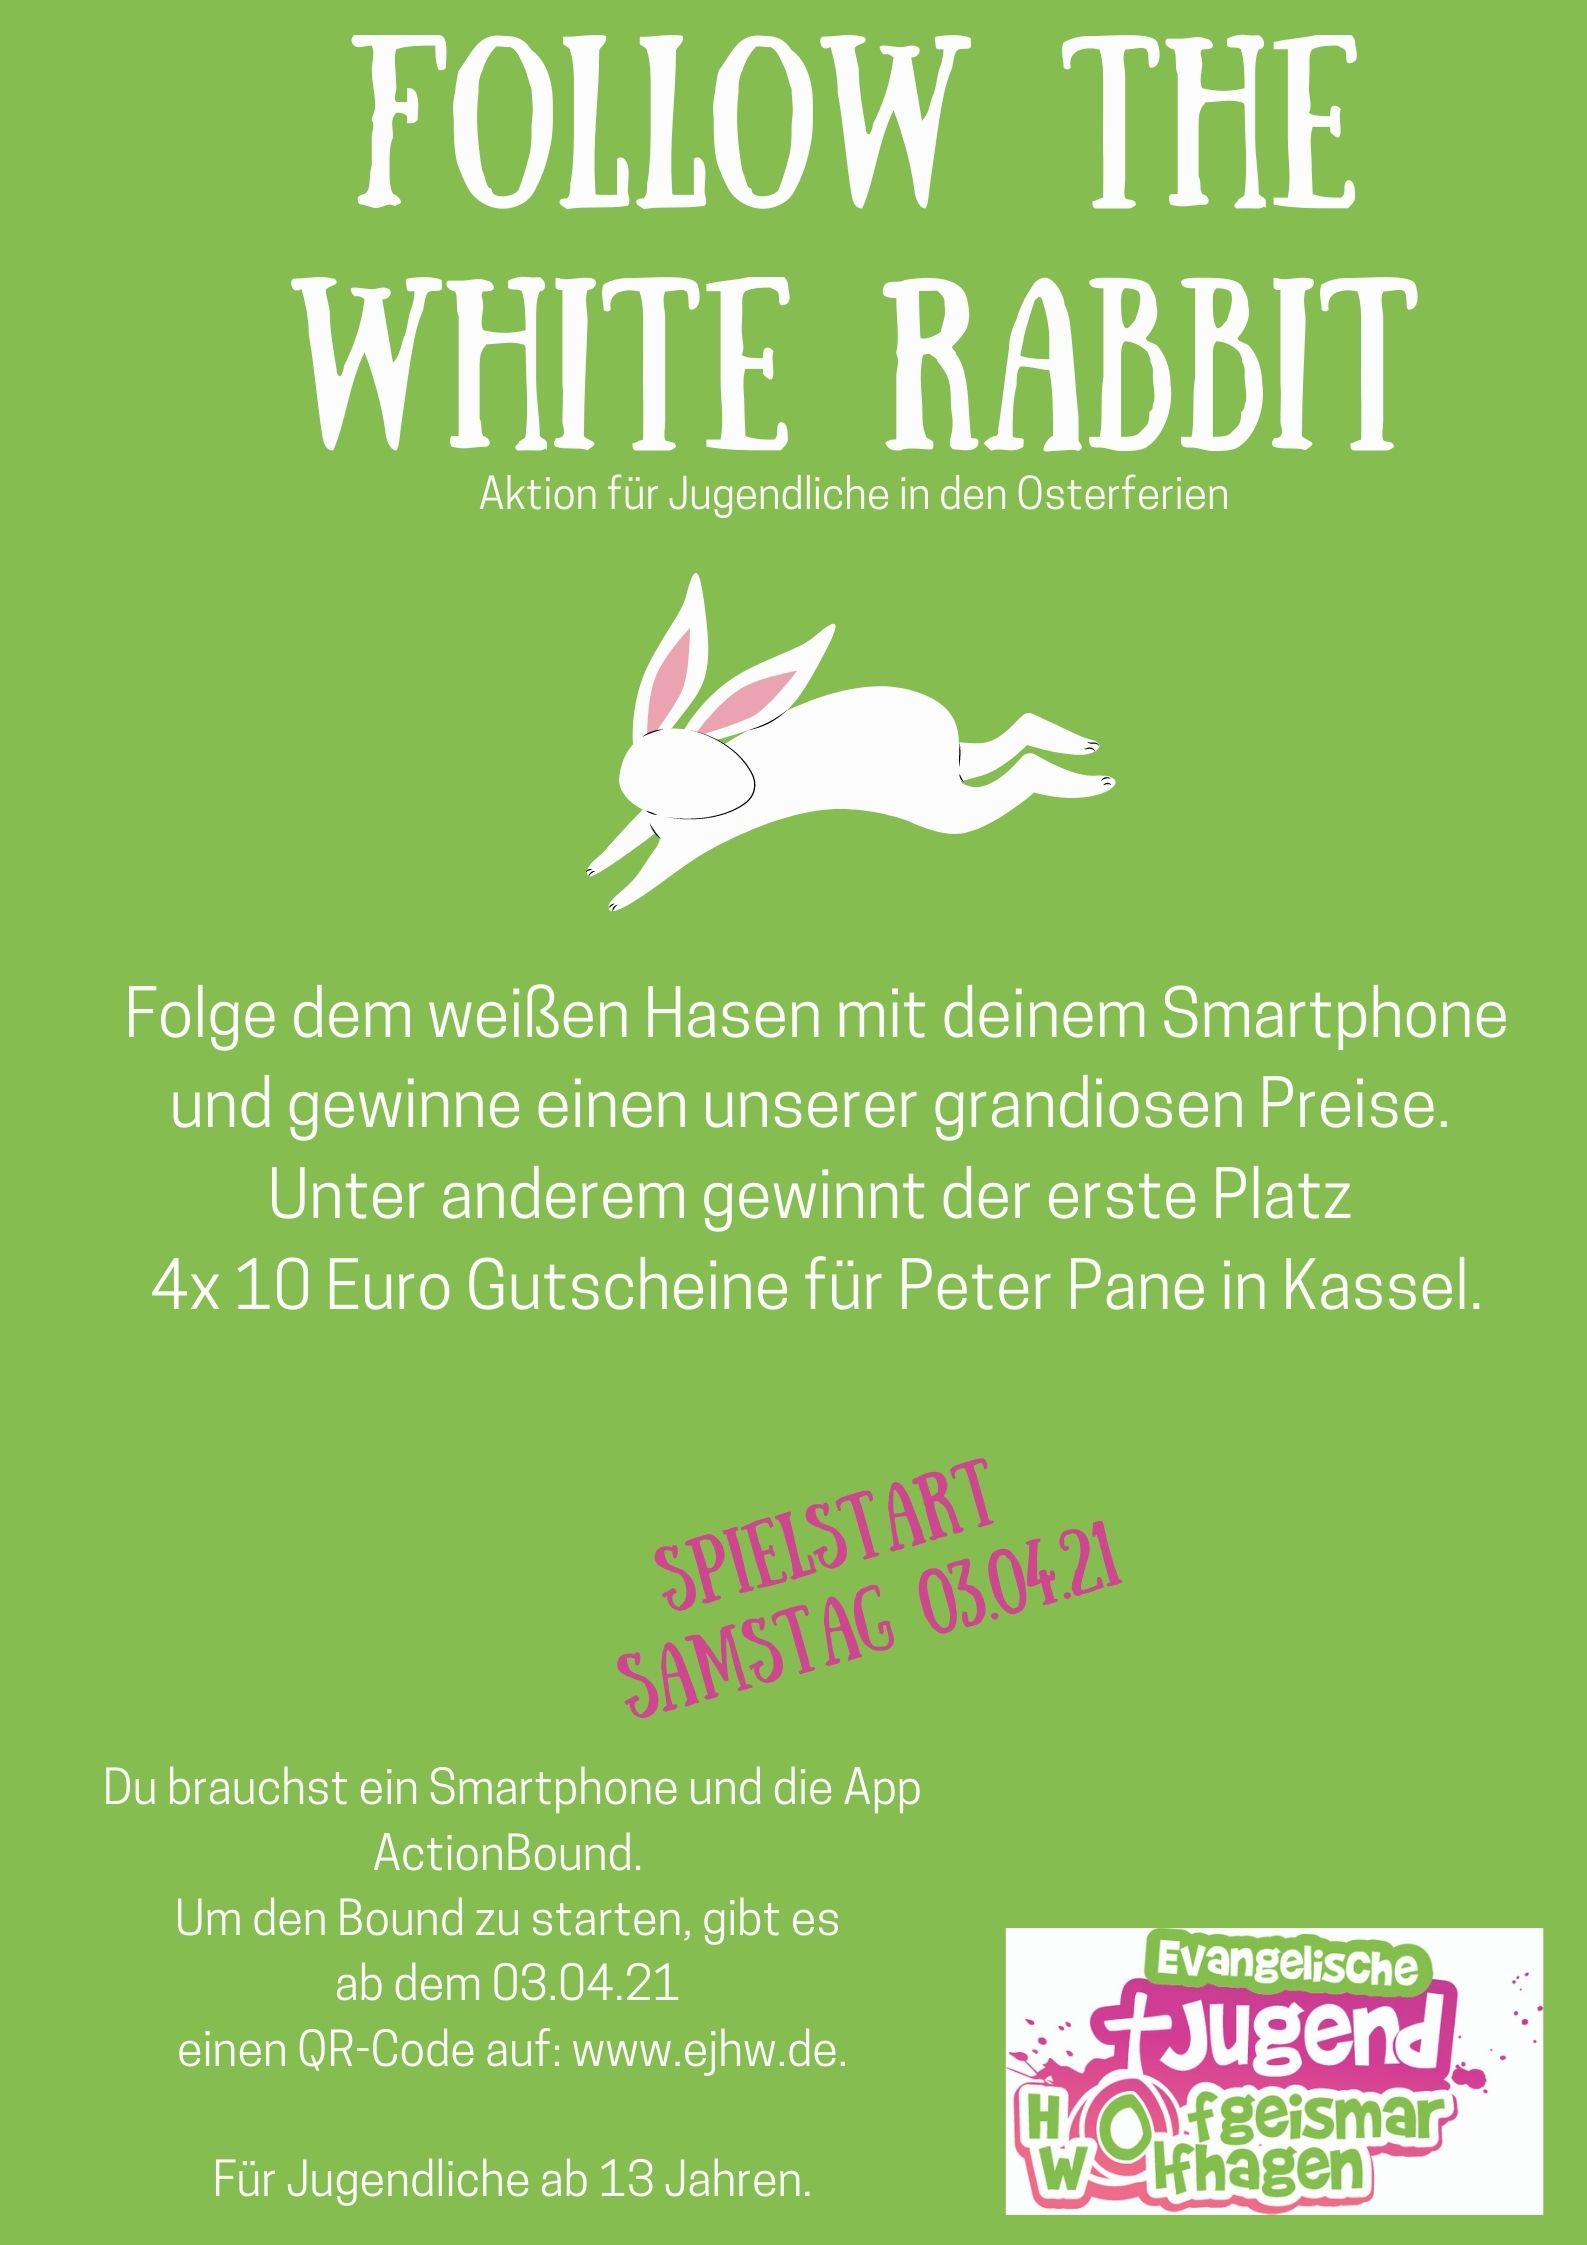 Follow the white rabbit - Oster-actionbound.jpg